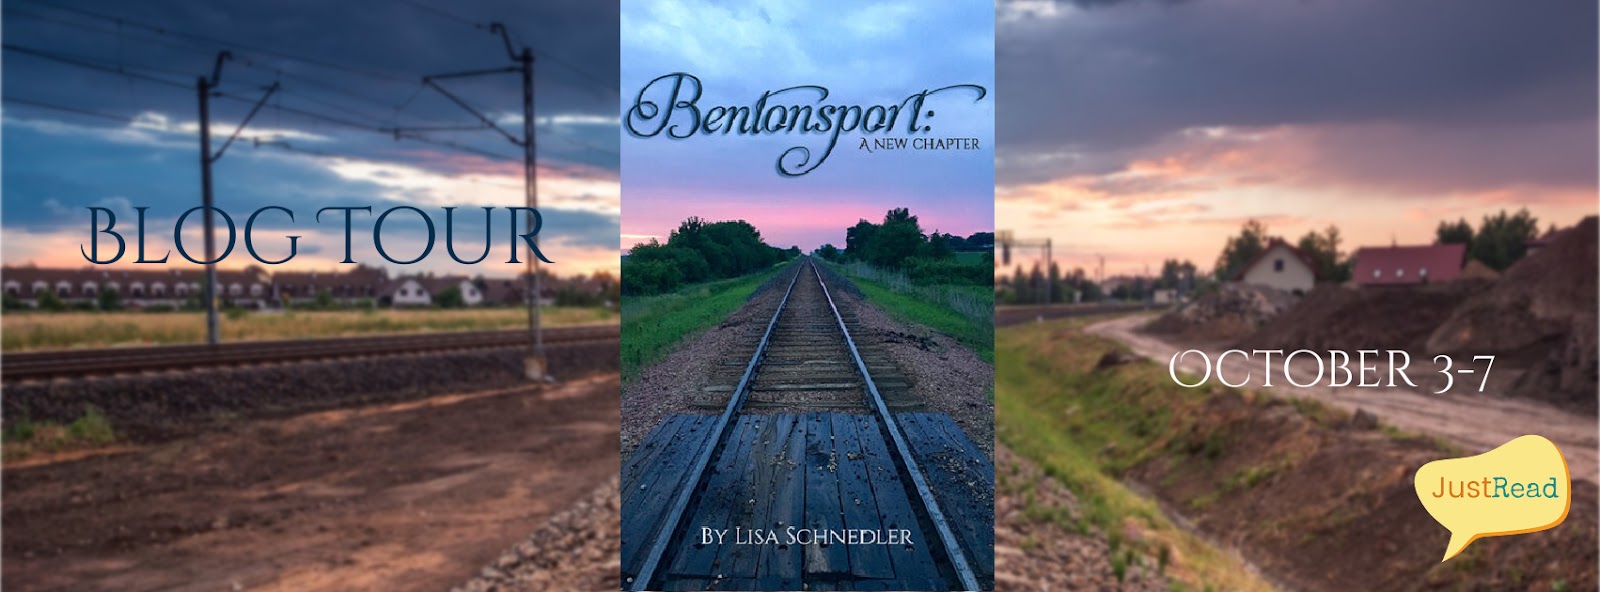 Bentonsport A New Chapter JustRead Blog Tour